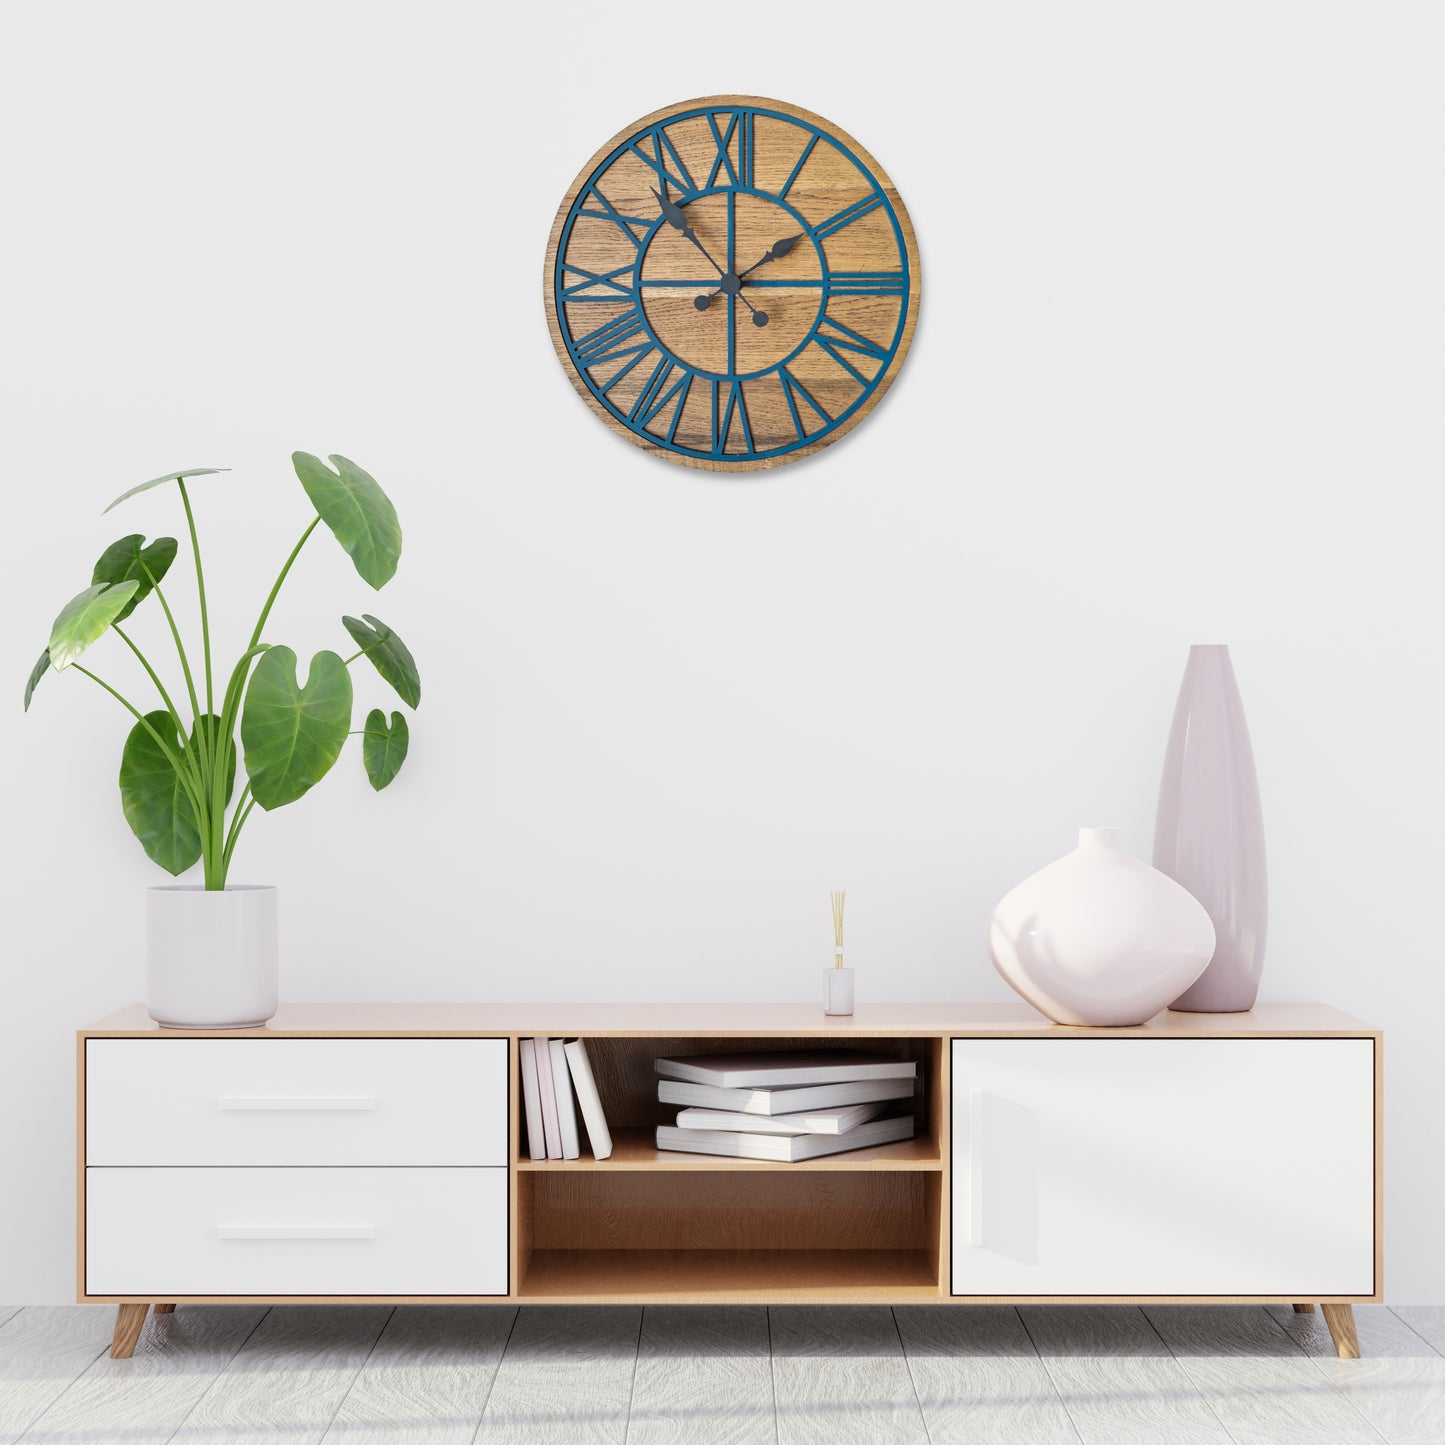 100% Solid Oak Kitchen Wall Clock | Round Teal Skeleton Clock | Rustic Clock